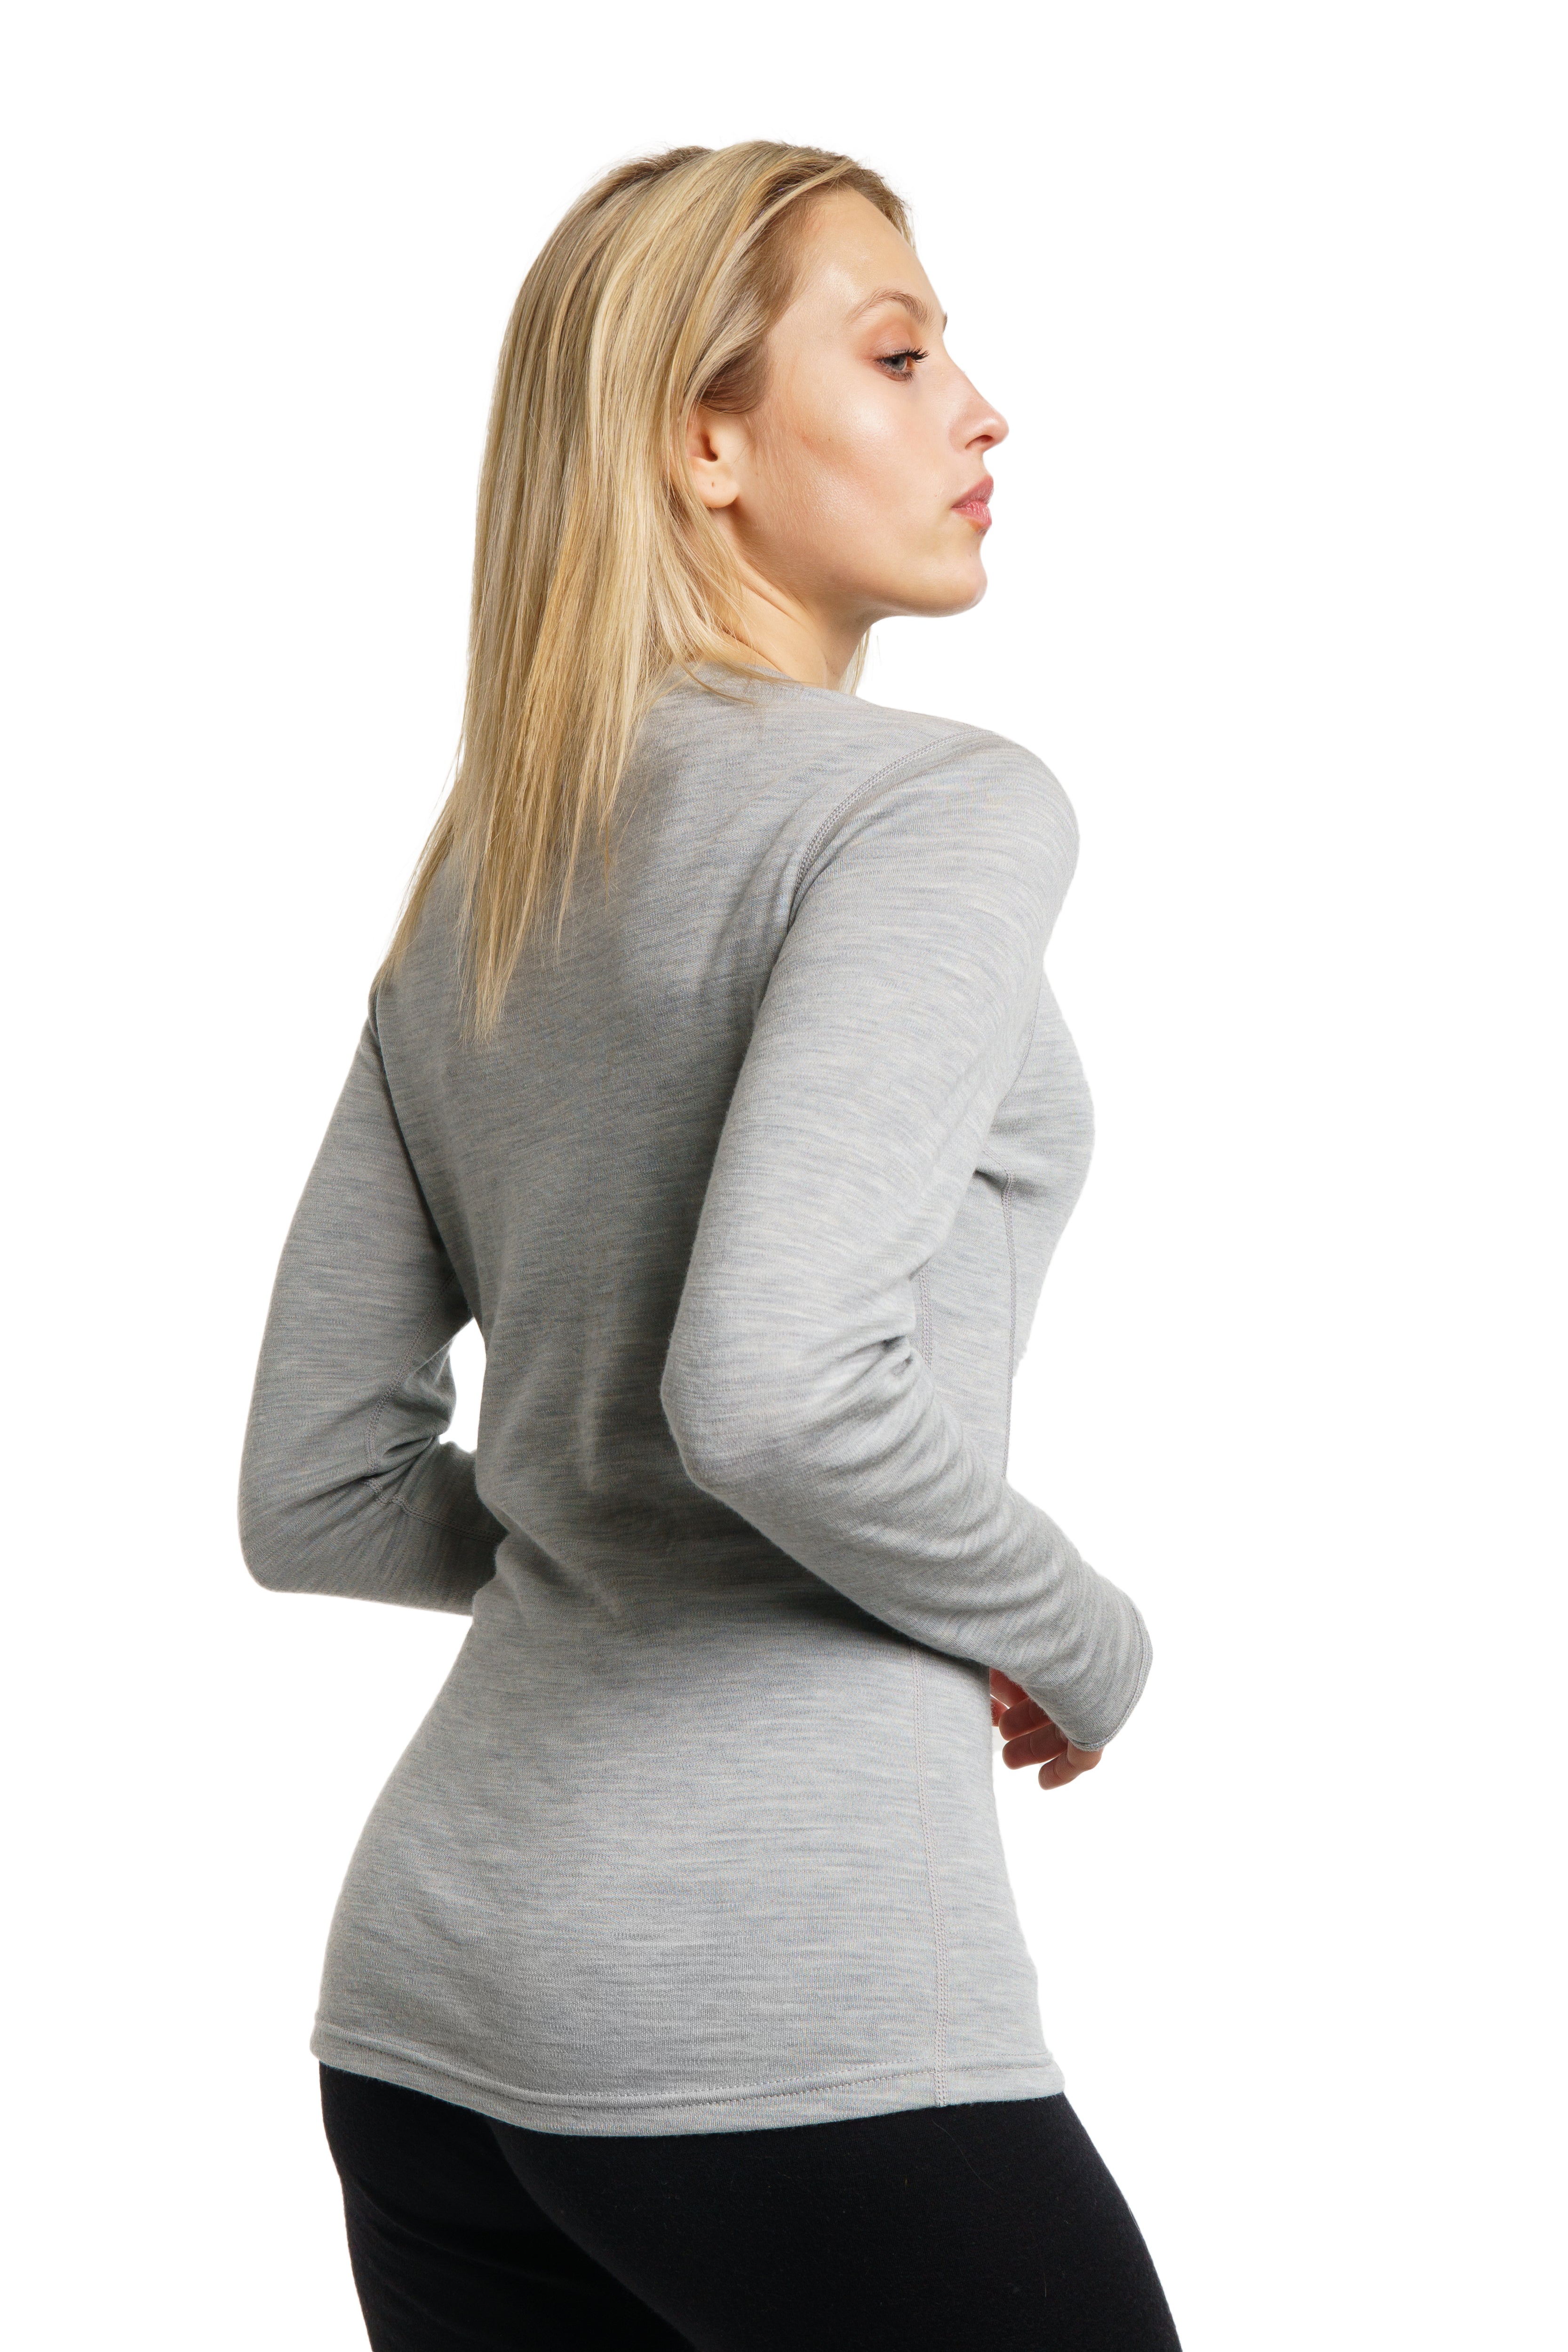 Merino Wool Base Layer Thermal Long Sleeve Top Women's Yoga